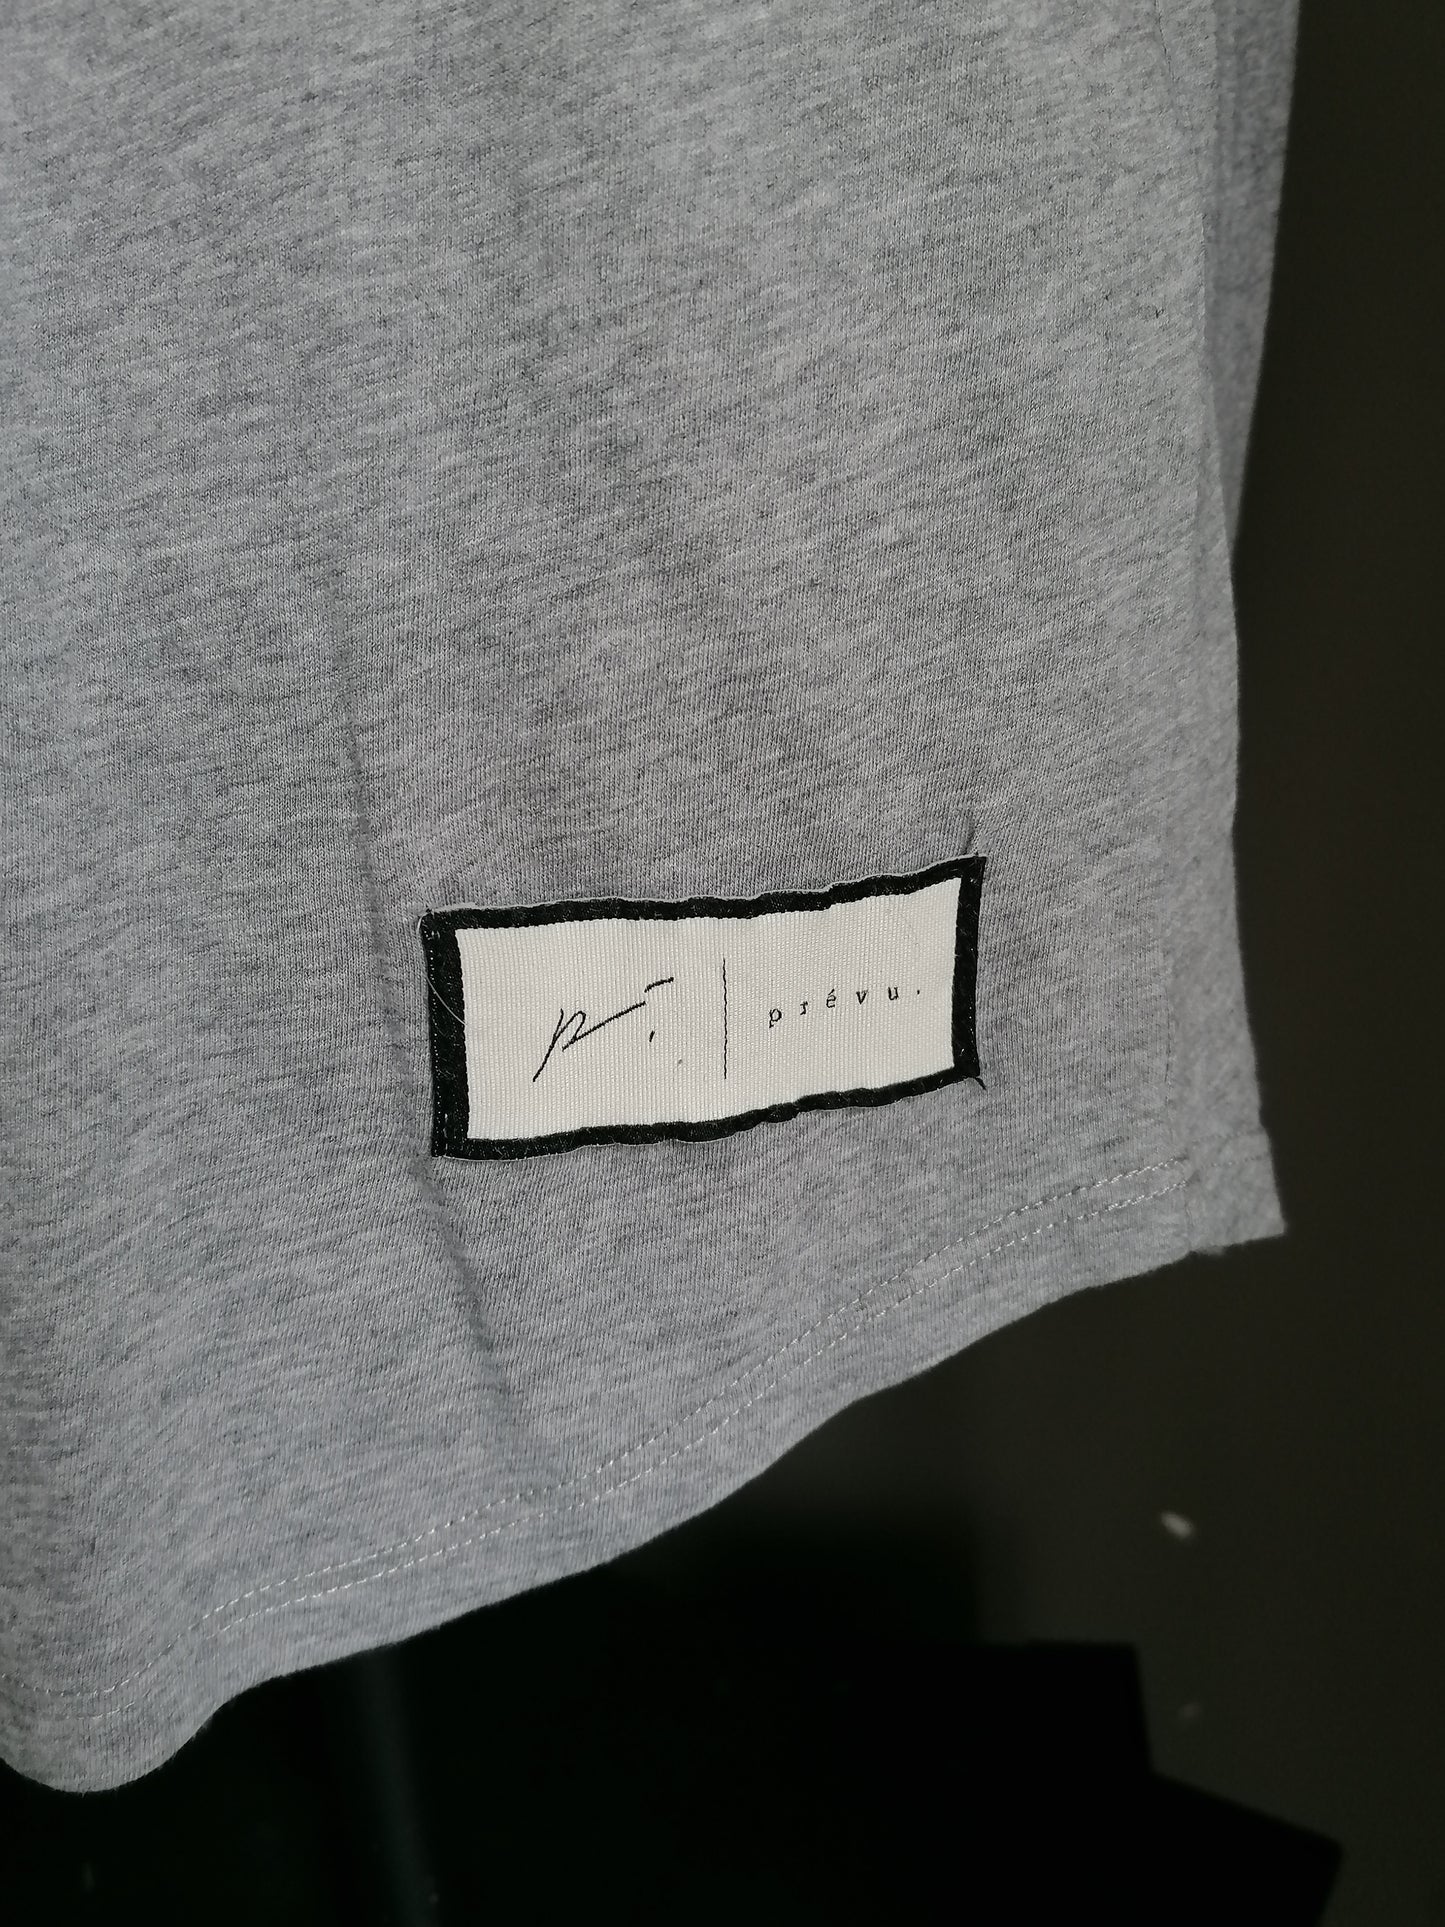 Prévu shirt. Gray with print. Size L.